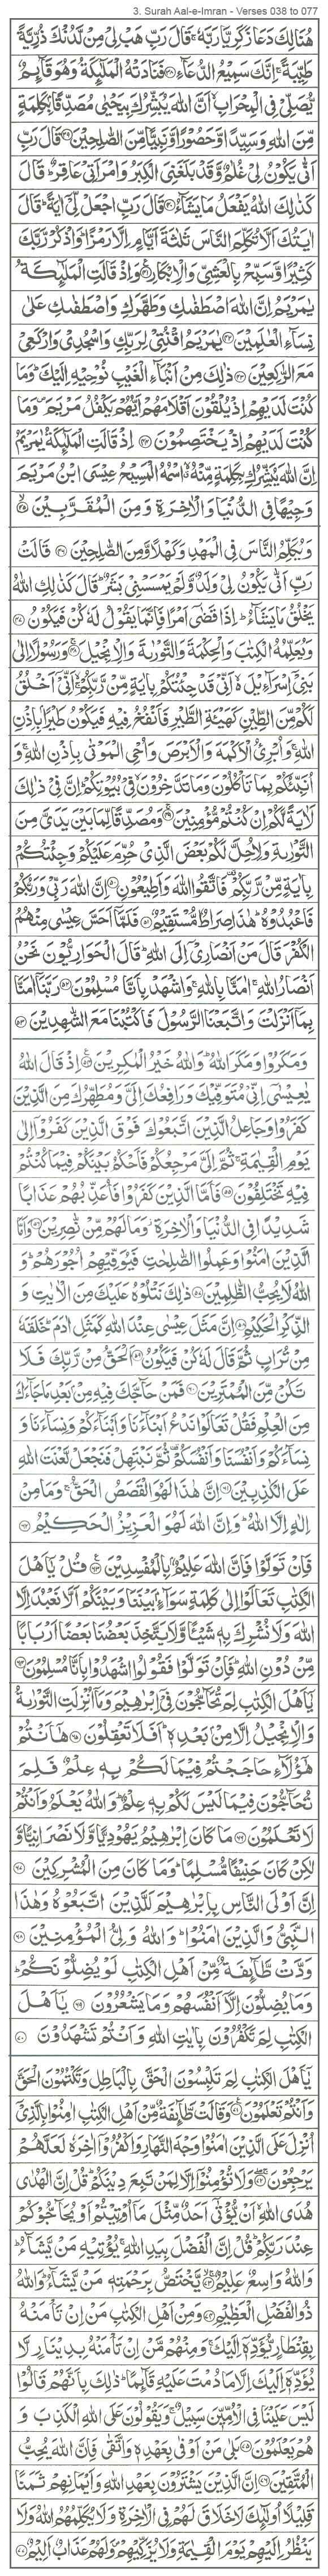 3 Surah Aal-e-Imran - Verses 038 to 077